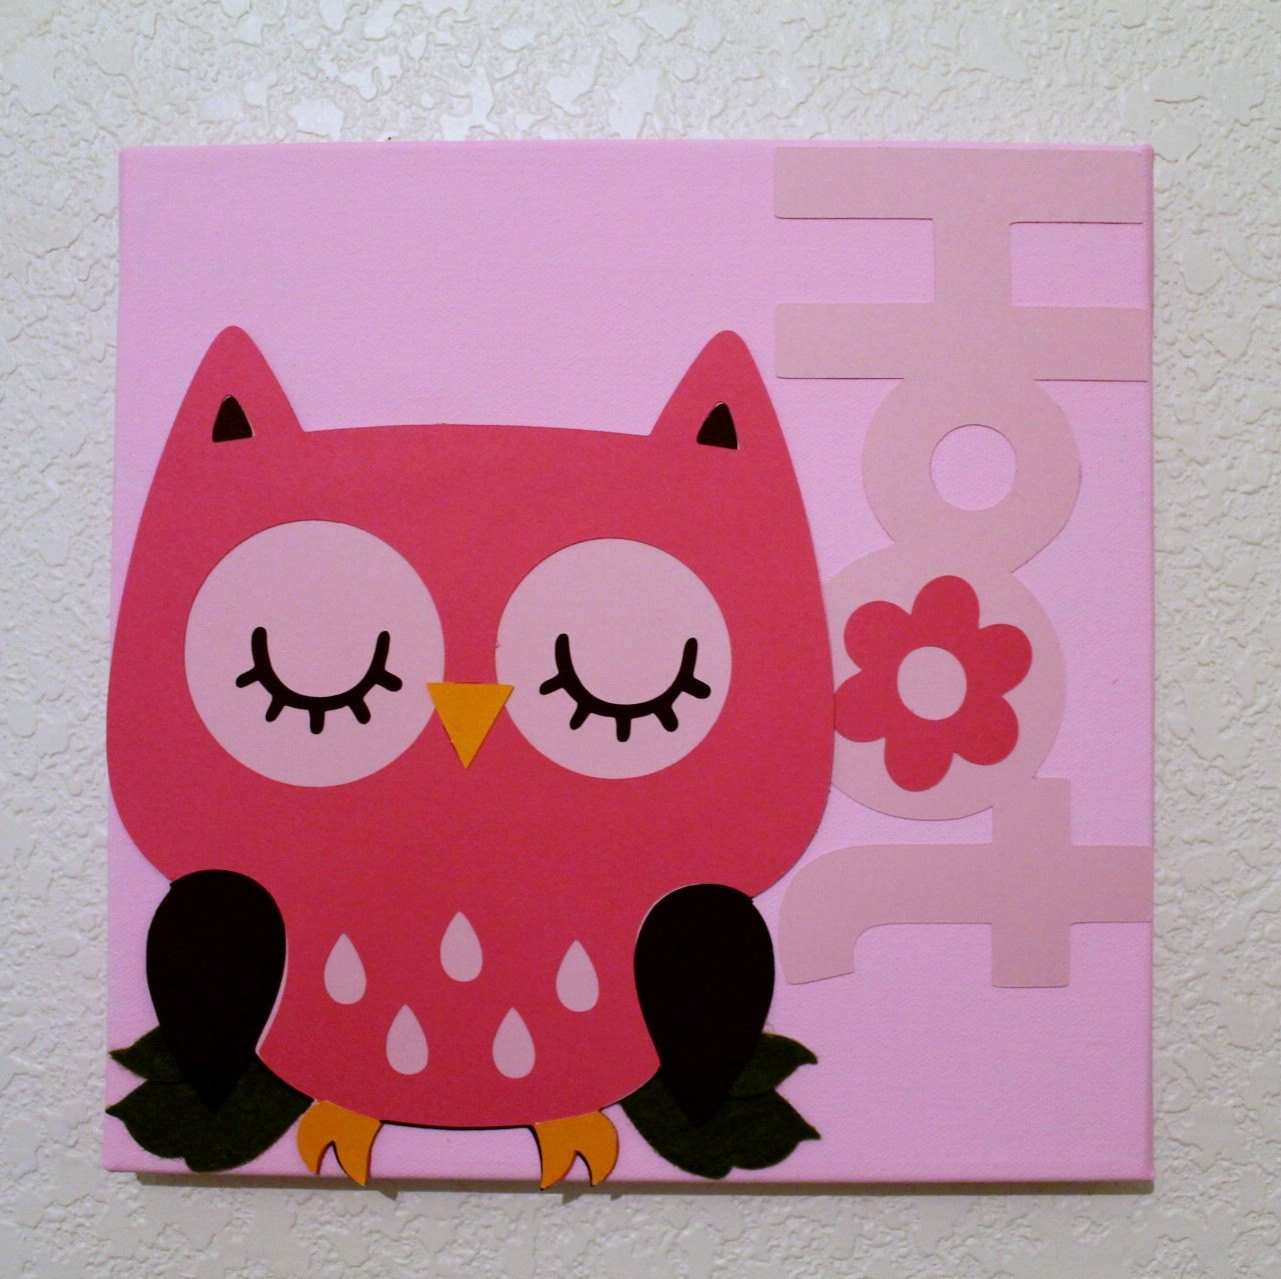 Baby Owls Decor
 Wall Decor Pink Owl Baby Nursery Kids Children Room Decor